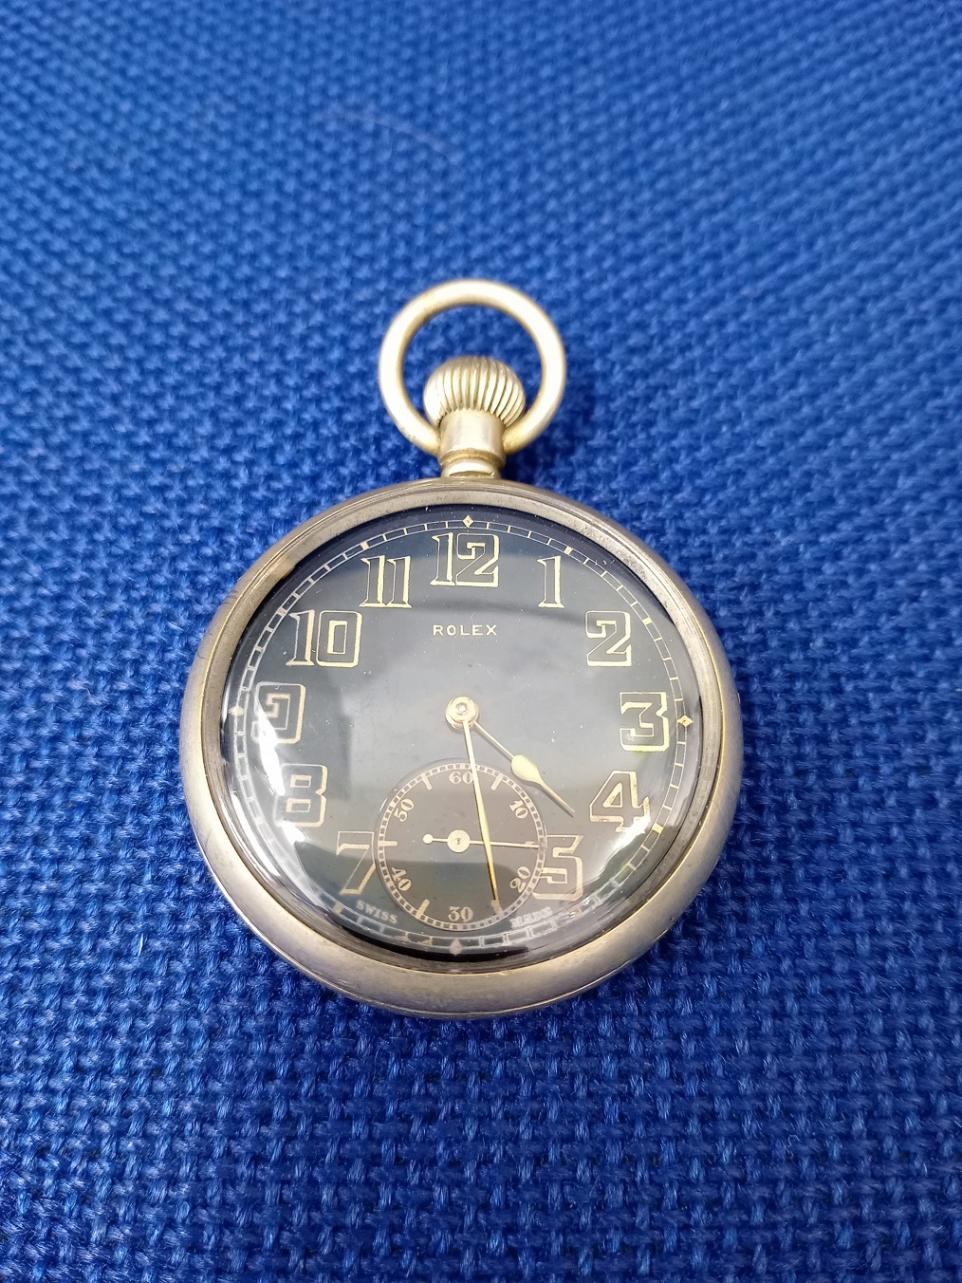  İkinci Dünya Savaşı'ndan kalma Rolex saati bulundu